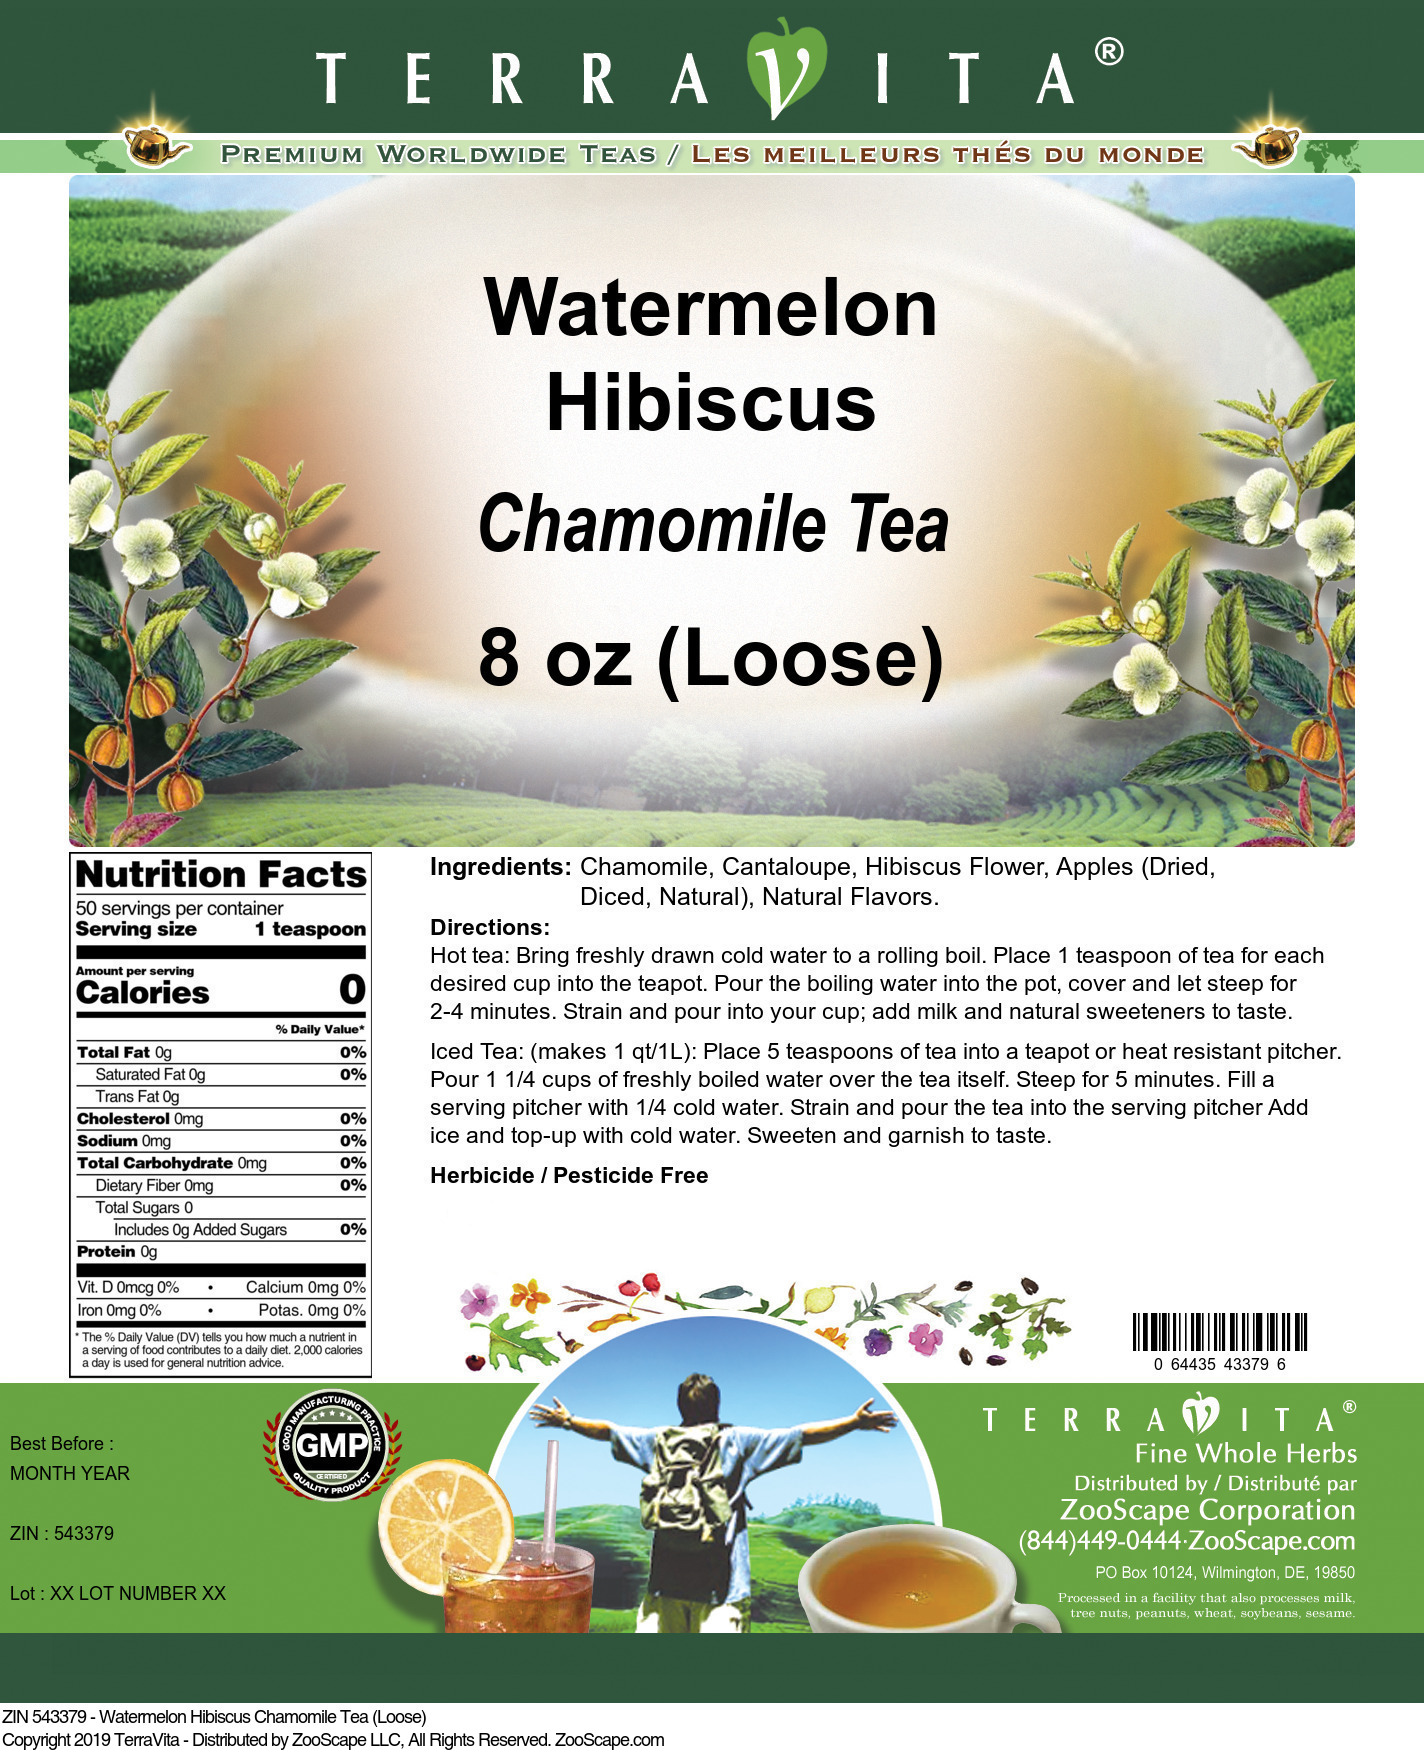 Watermelon Hibiscus Chamomile Tea (Loose) - Label